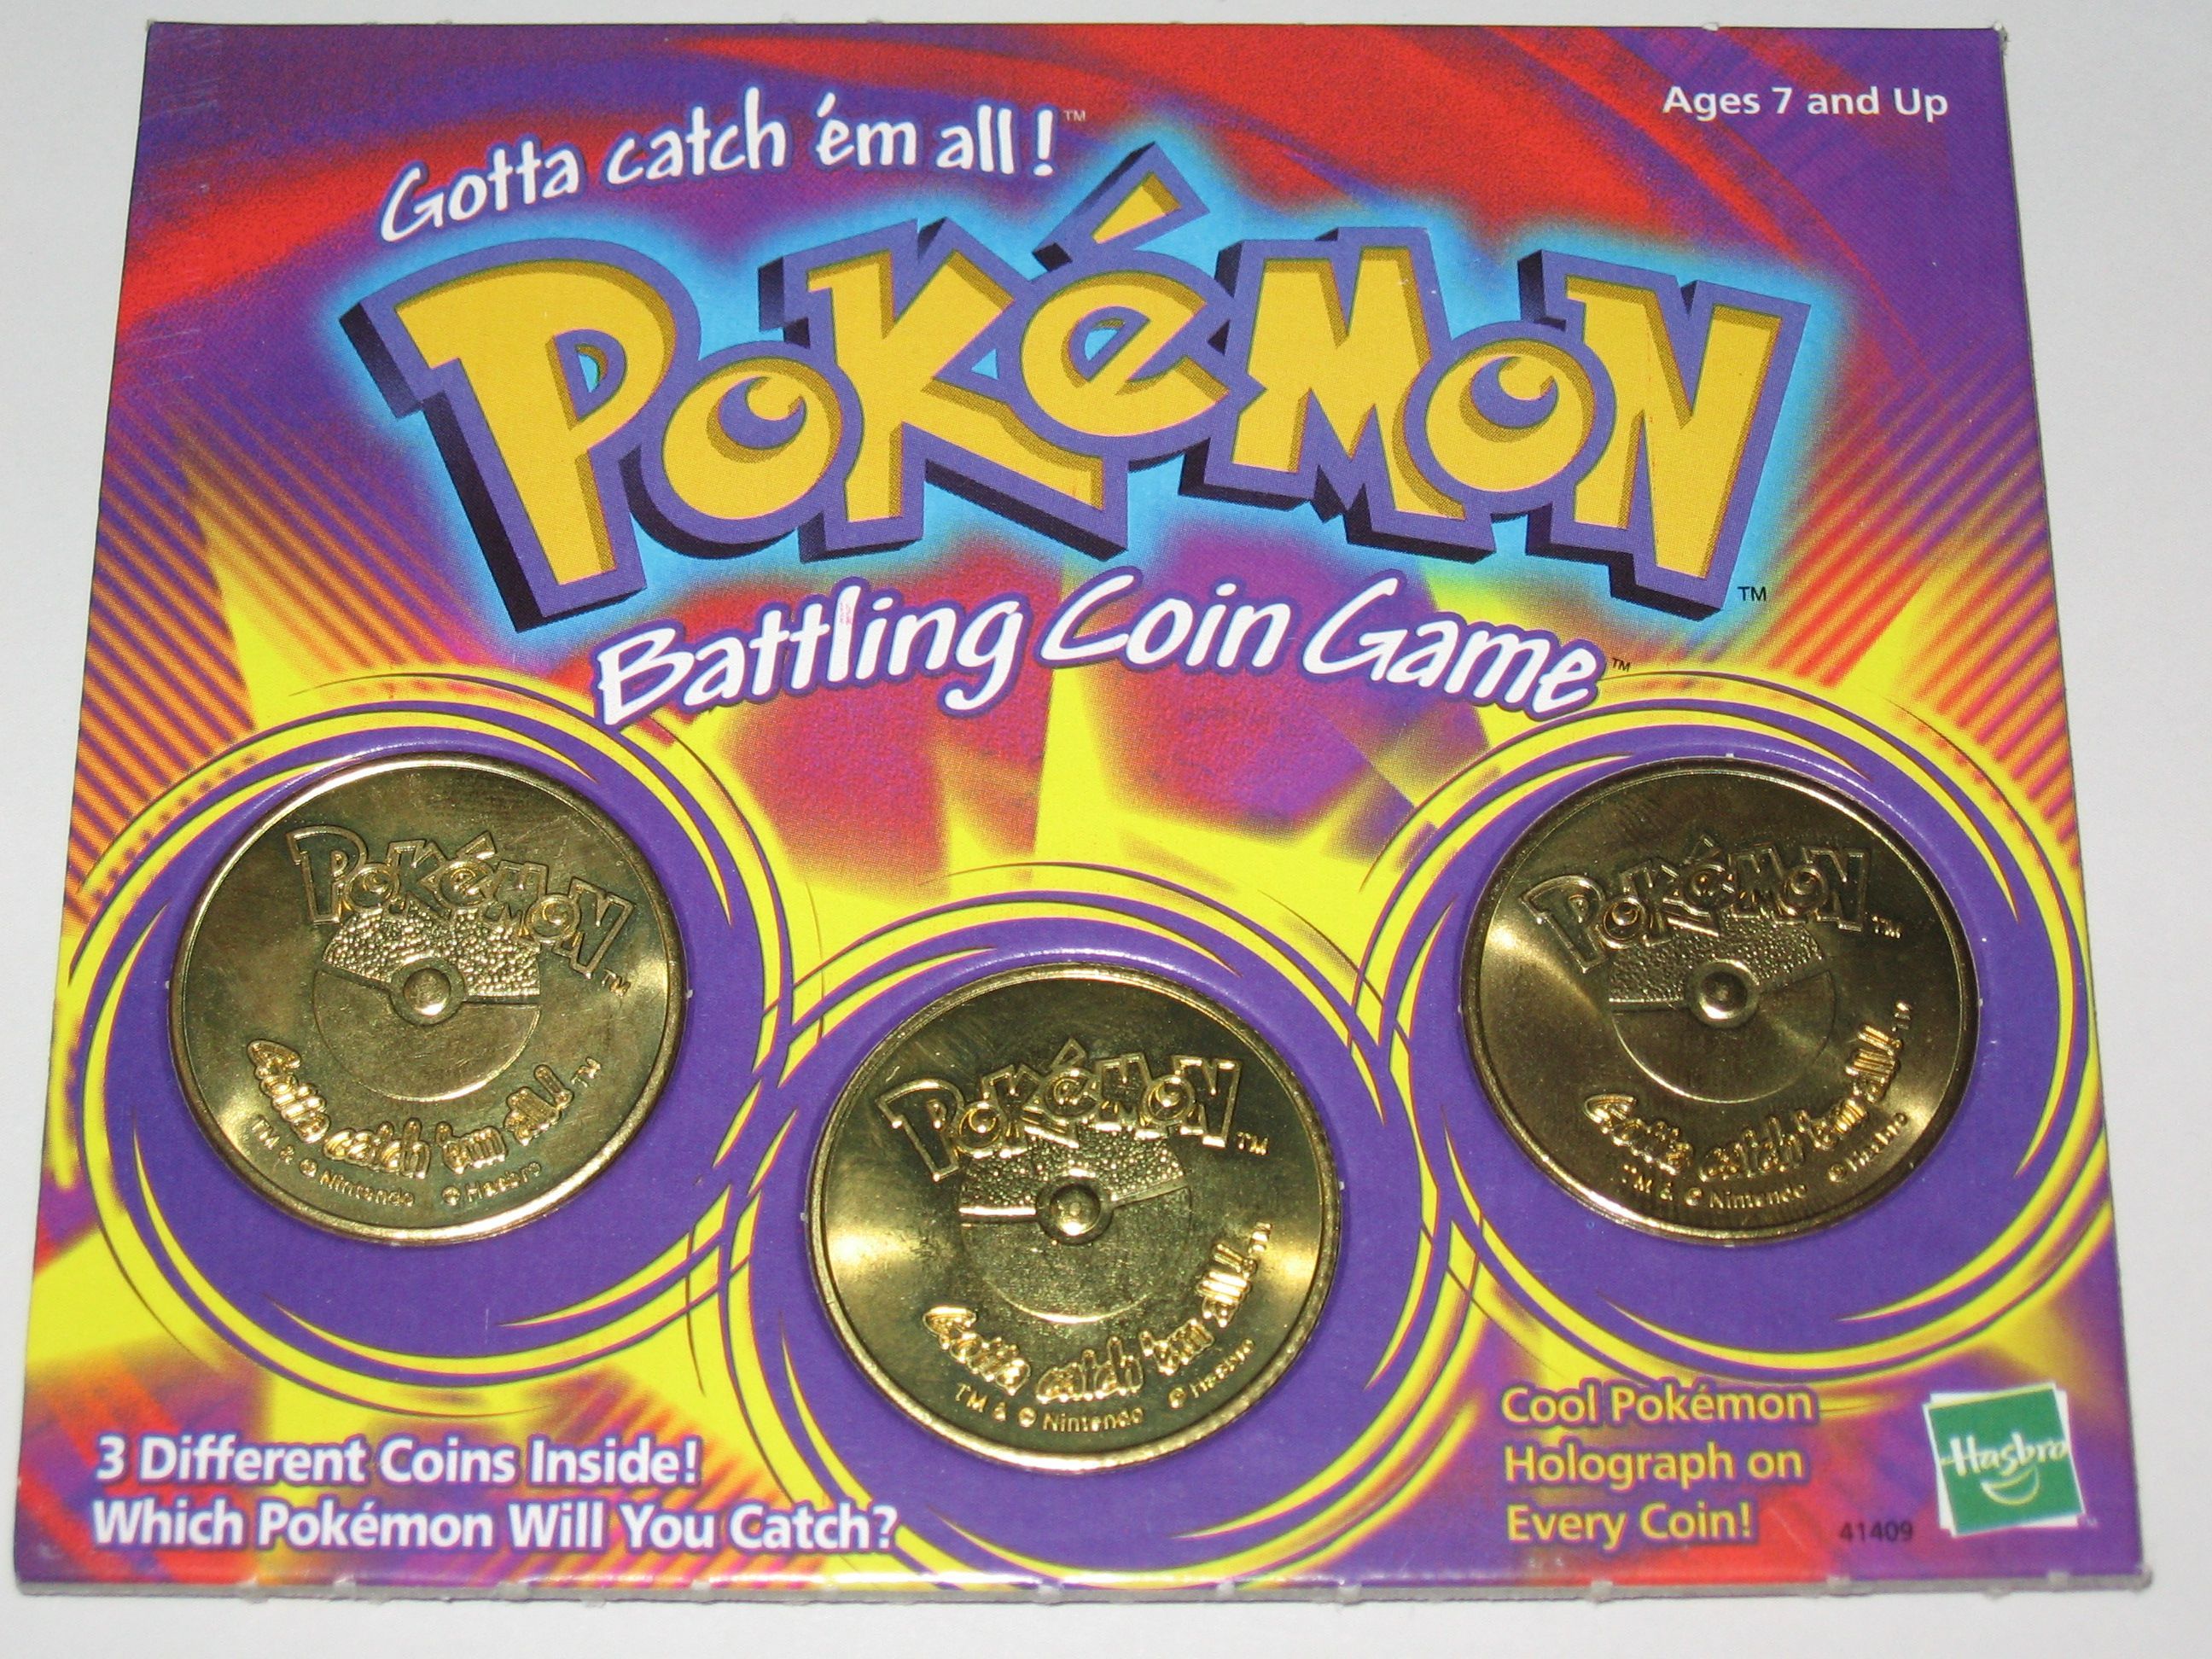 Pokémon Battling Coin Game